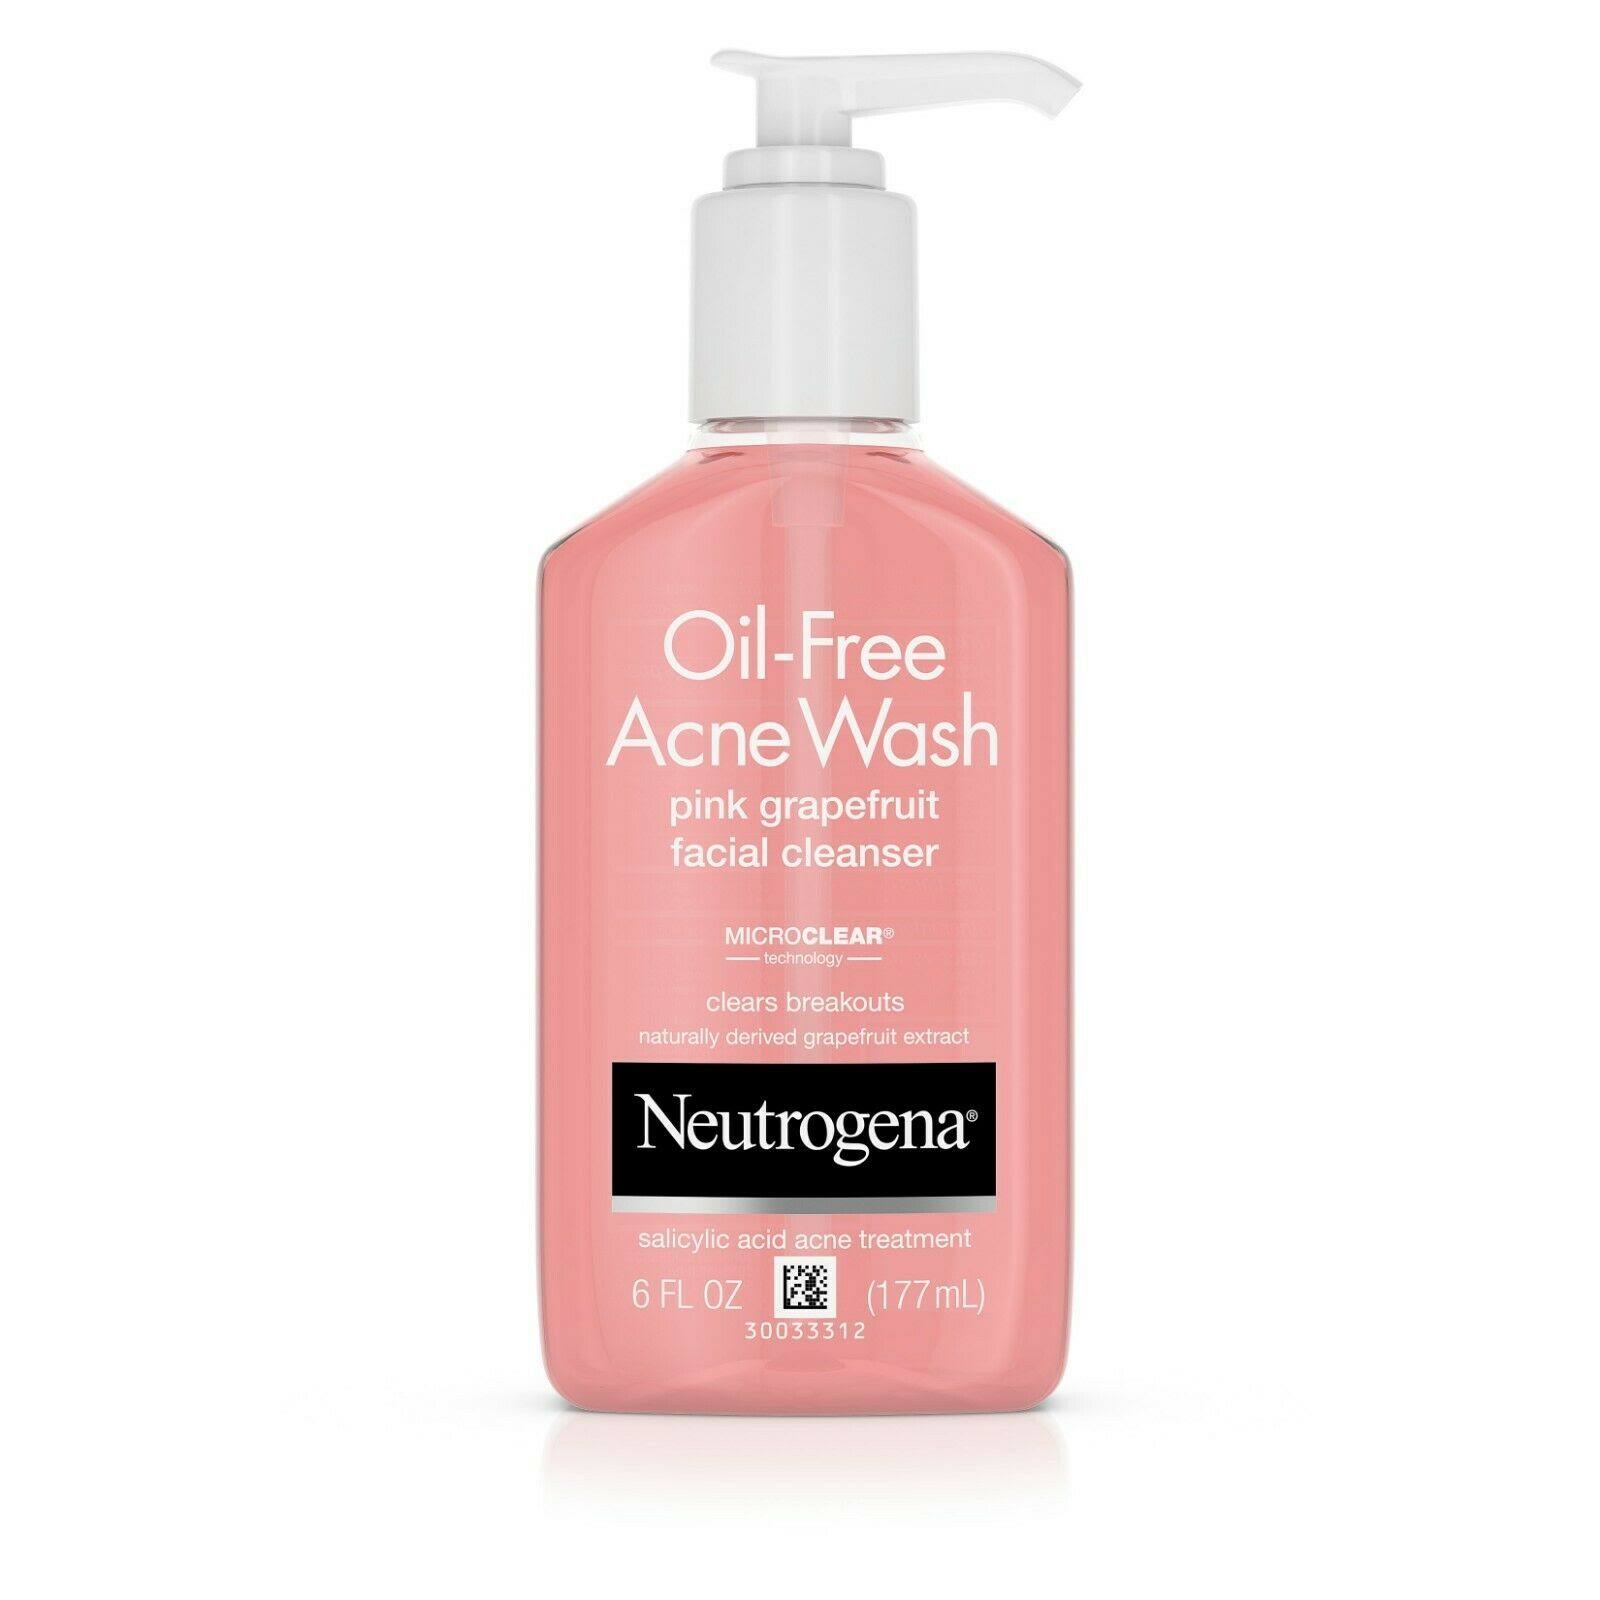 Neutrogena Oil-Free Acne Wash Facial Cleanser - Pink Grapefruit, 6oz